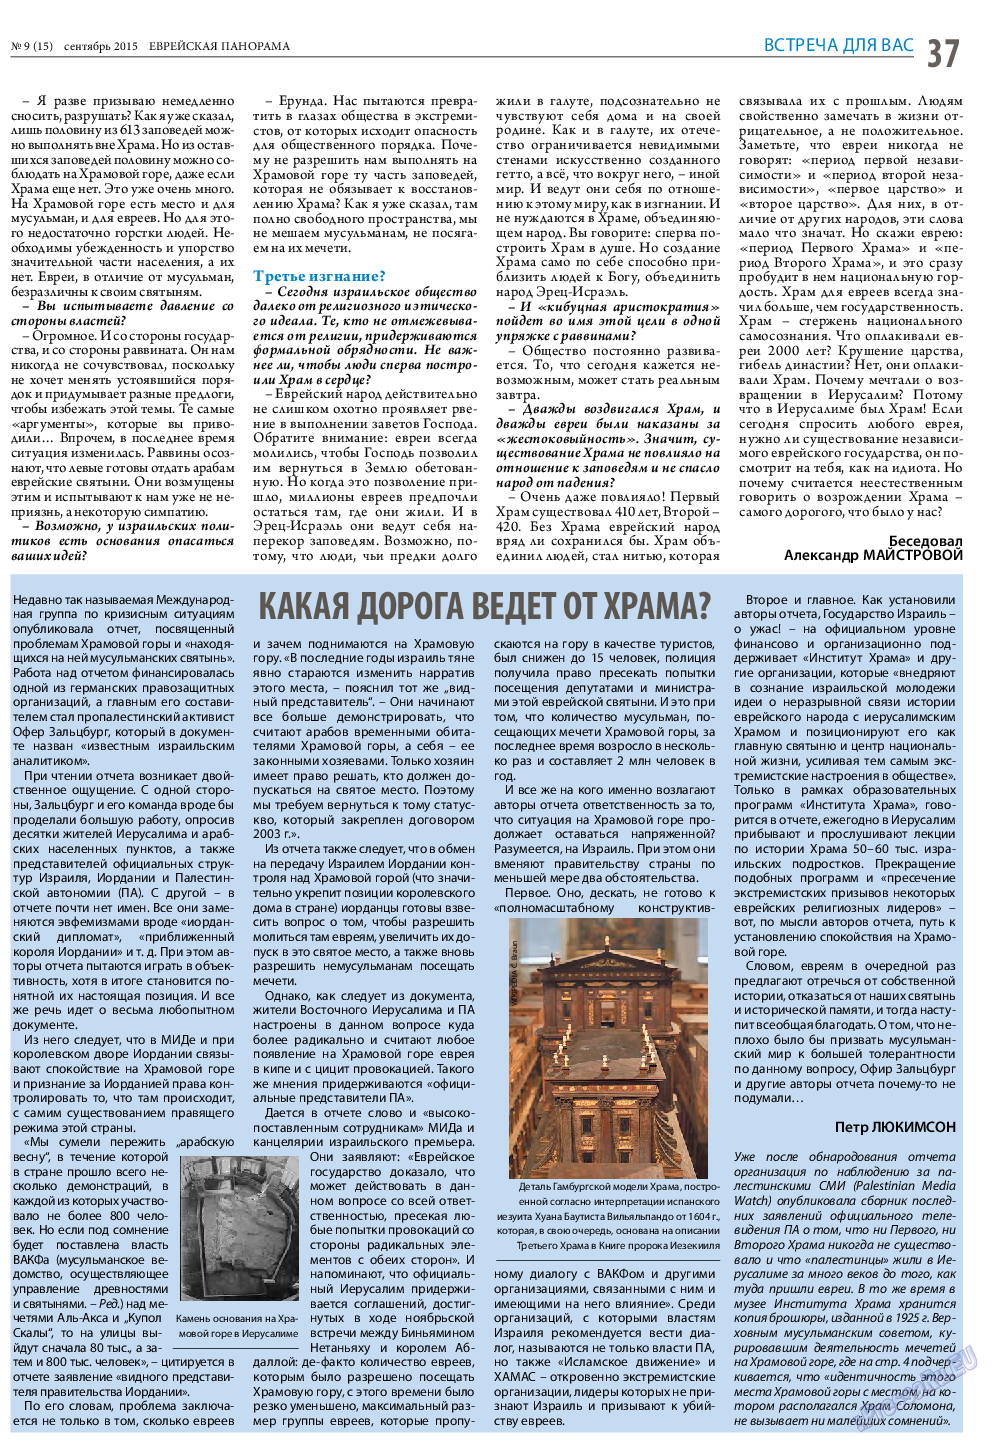 Еврейская панорама, газета. 2015 №9 стр.37